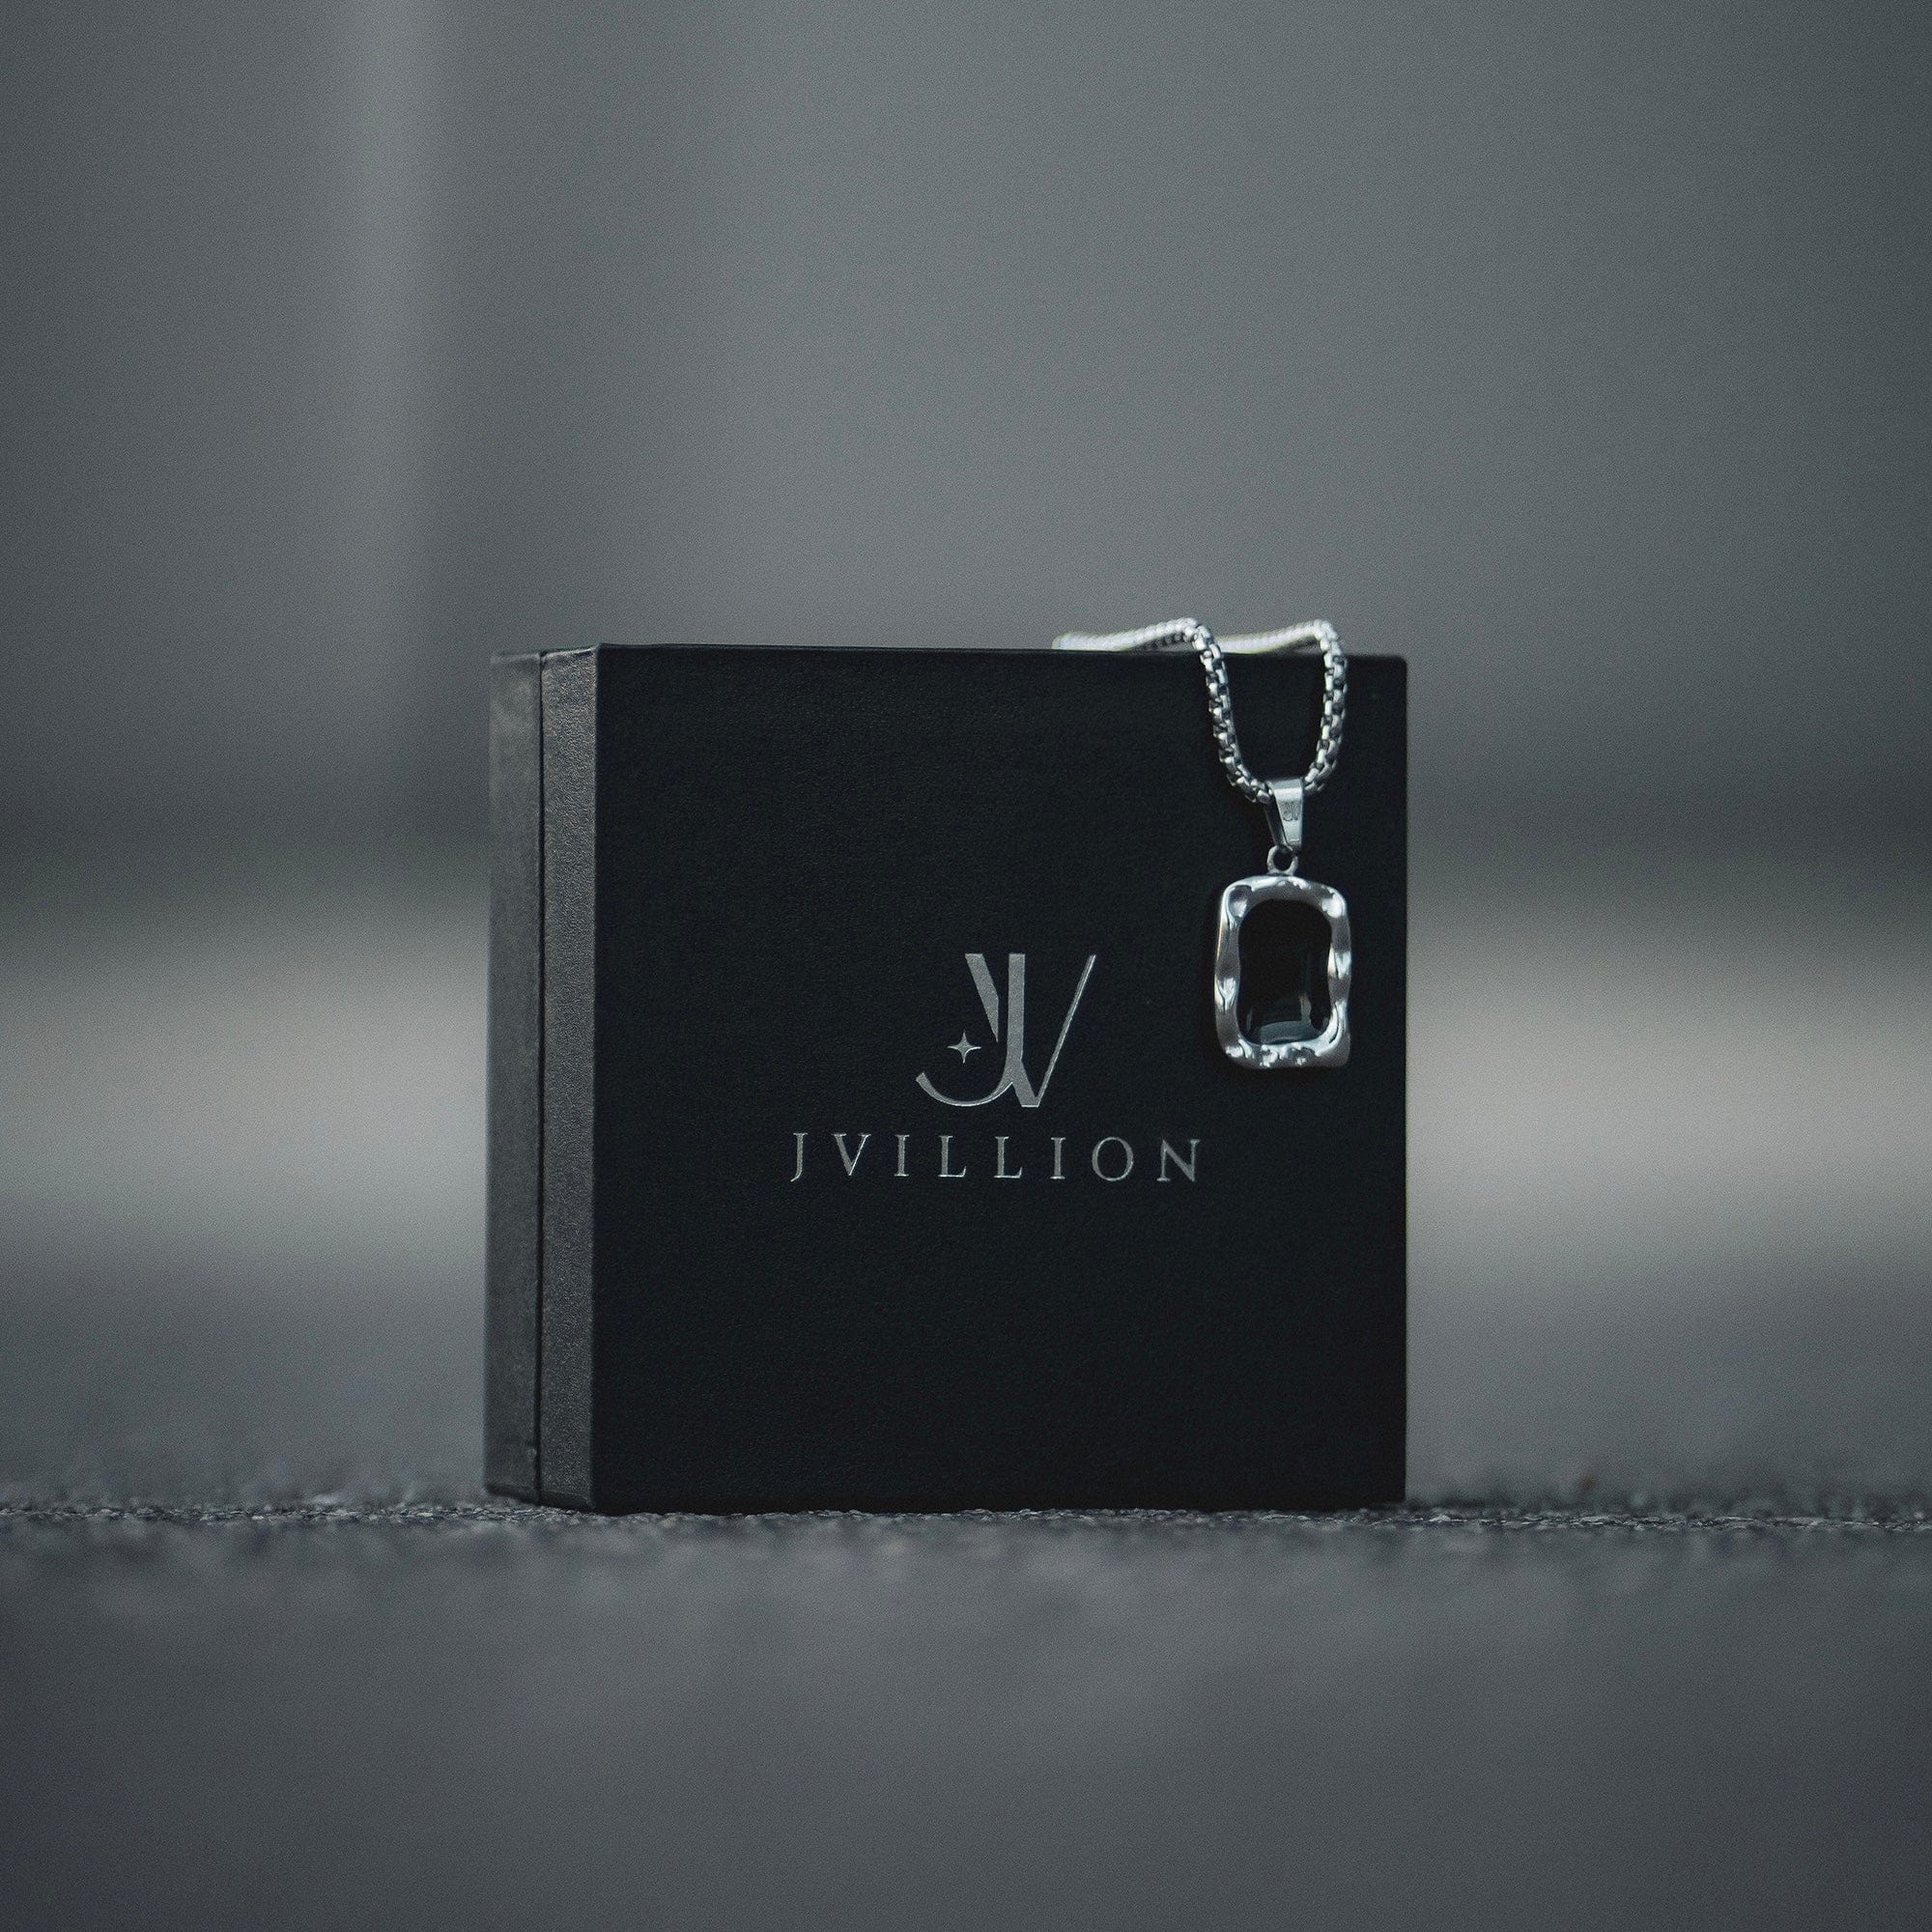 Onyx Box Chain - Silver (2,5mm) Chain with Pendant JVILLION